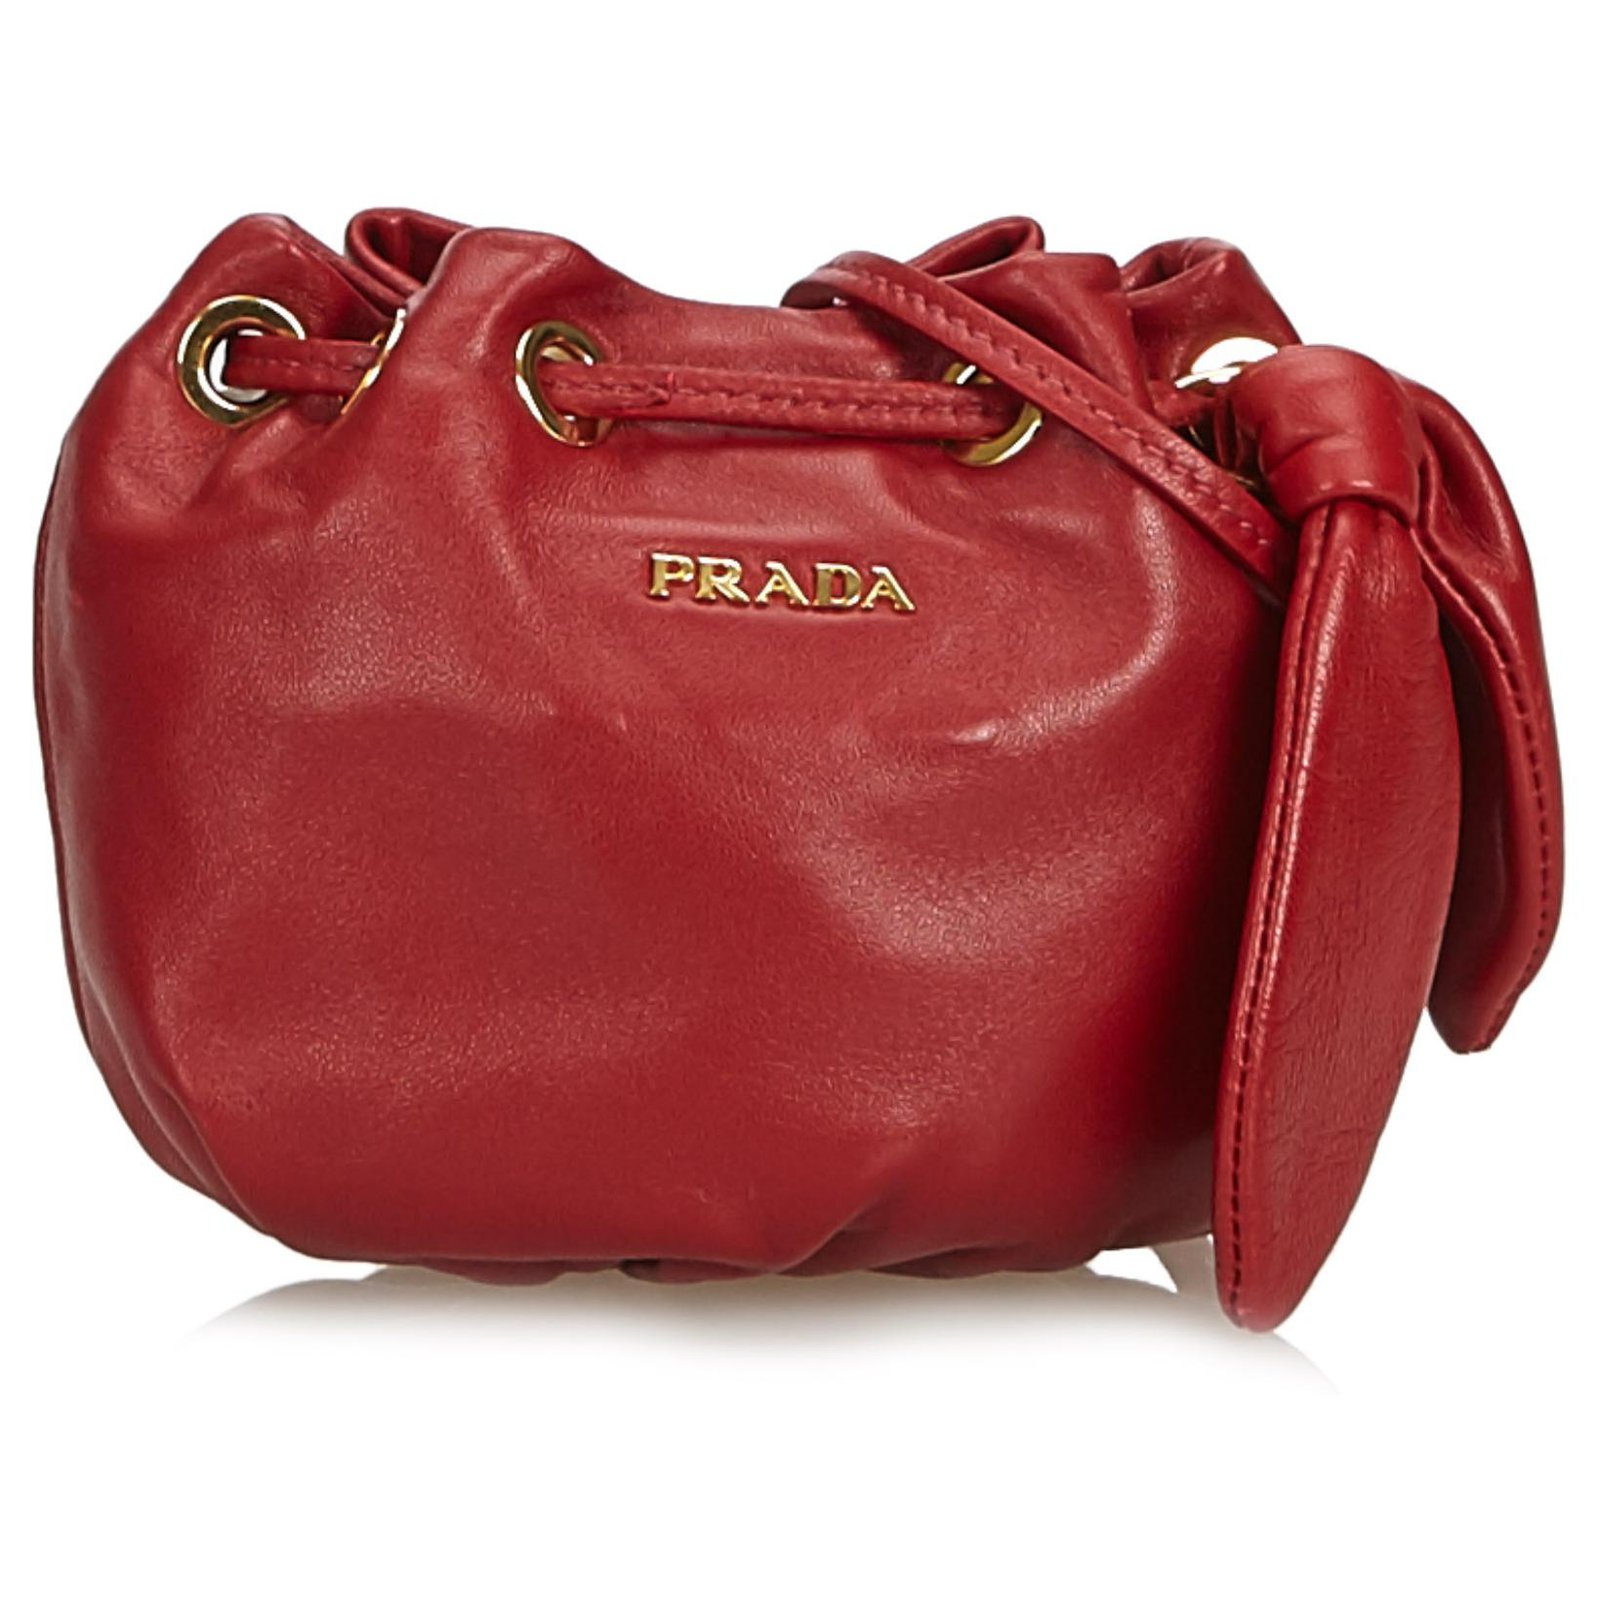 Prada Prada Red Leather Crossbody Bag 